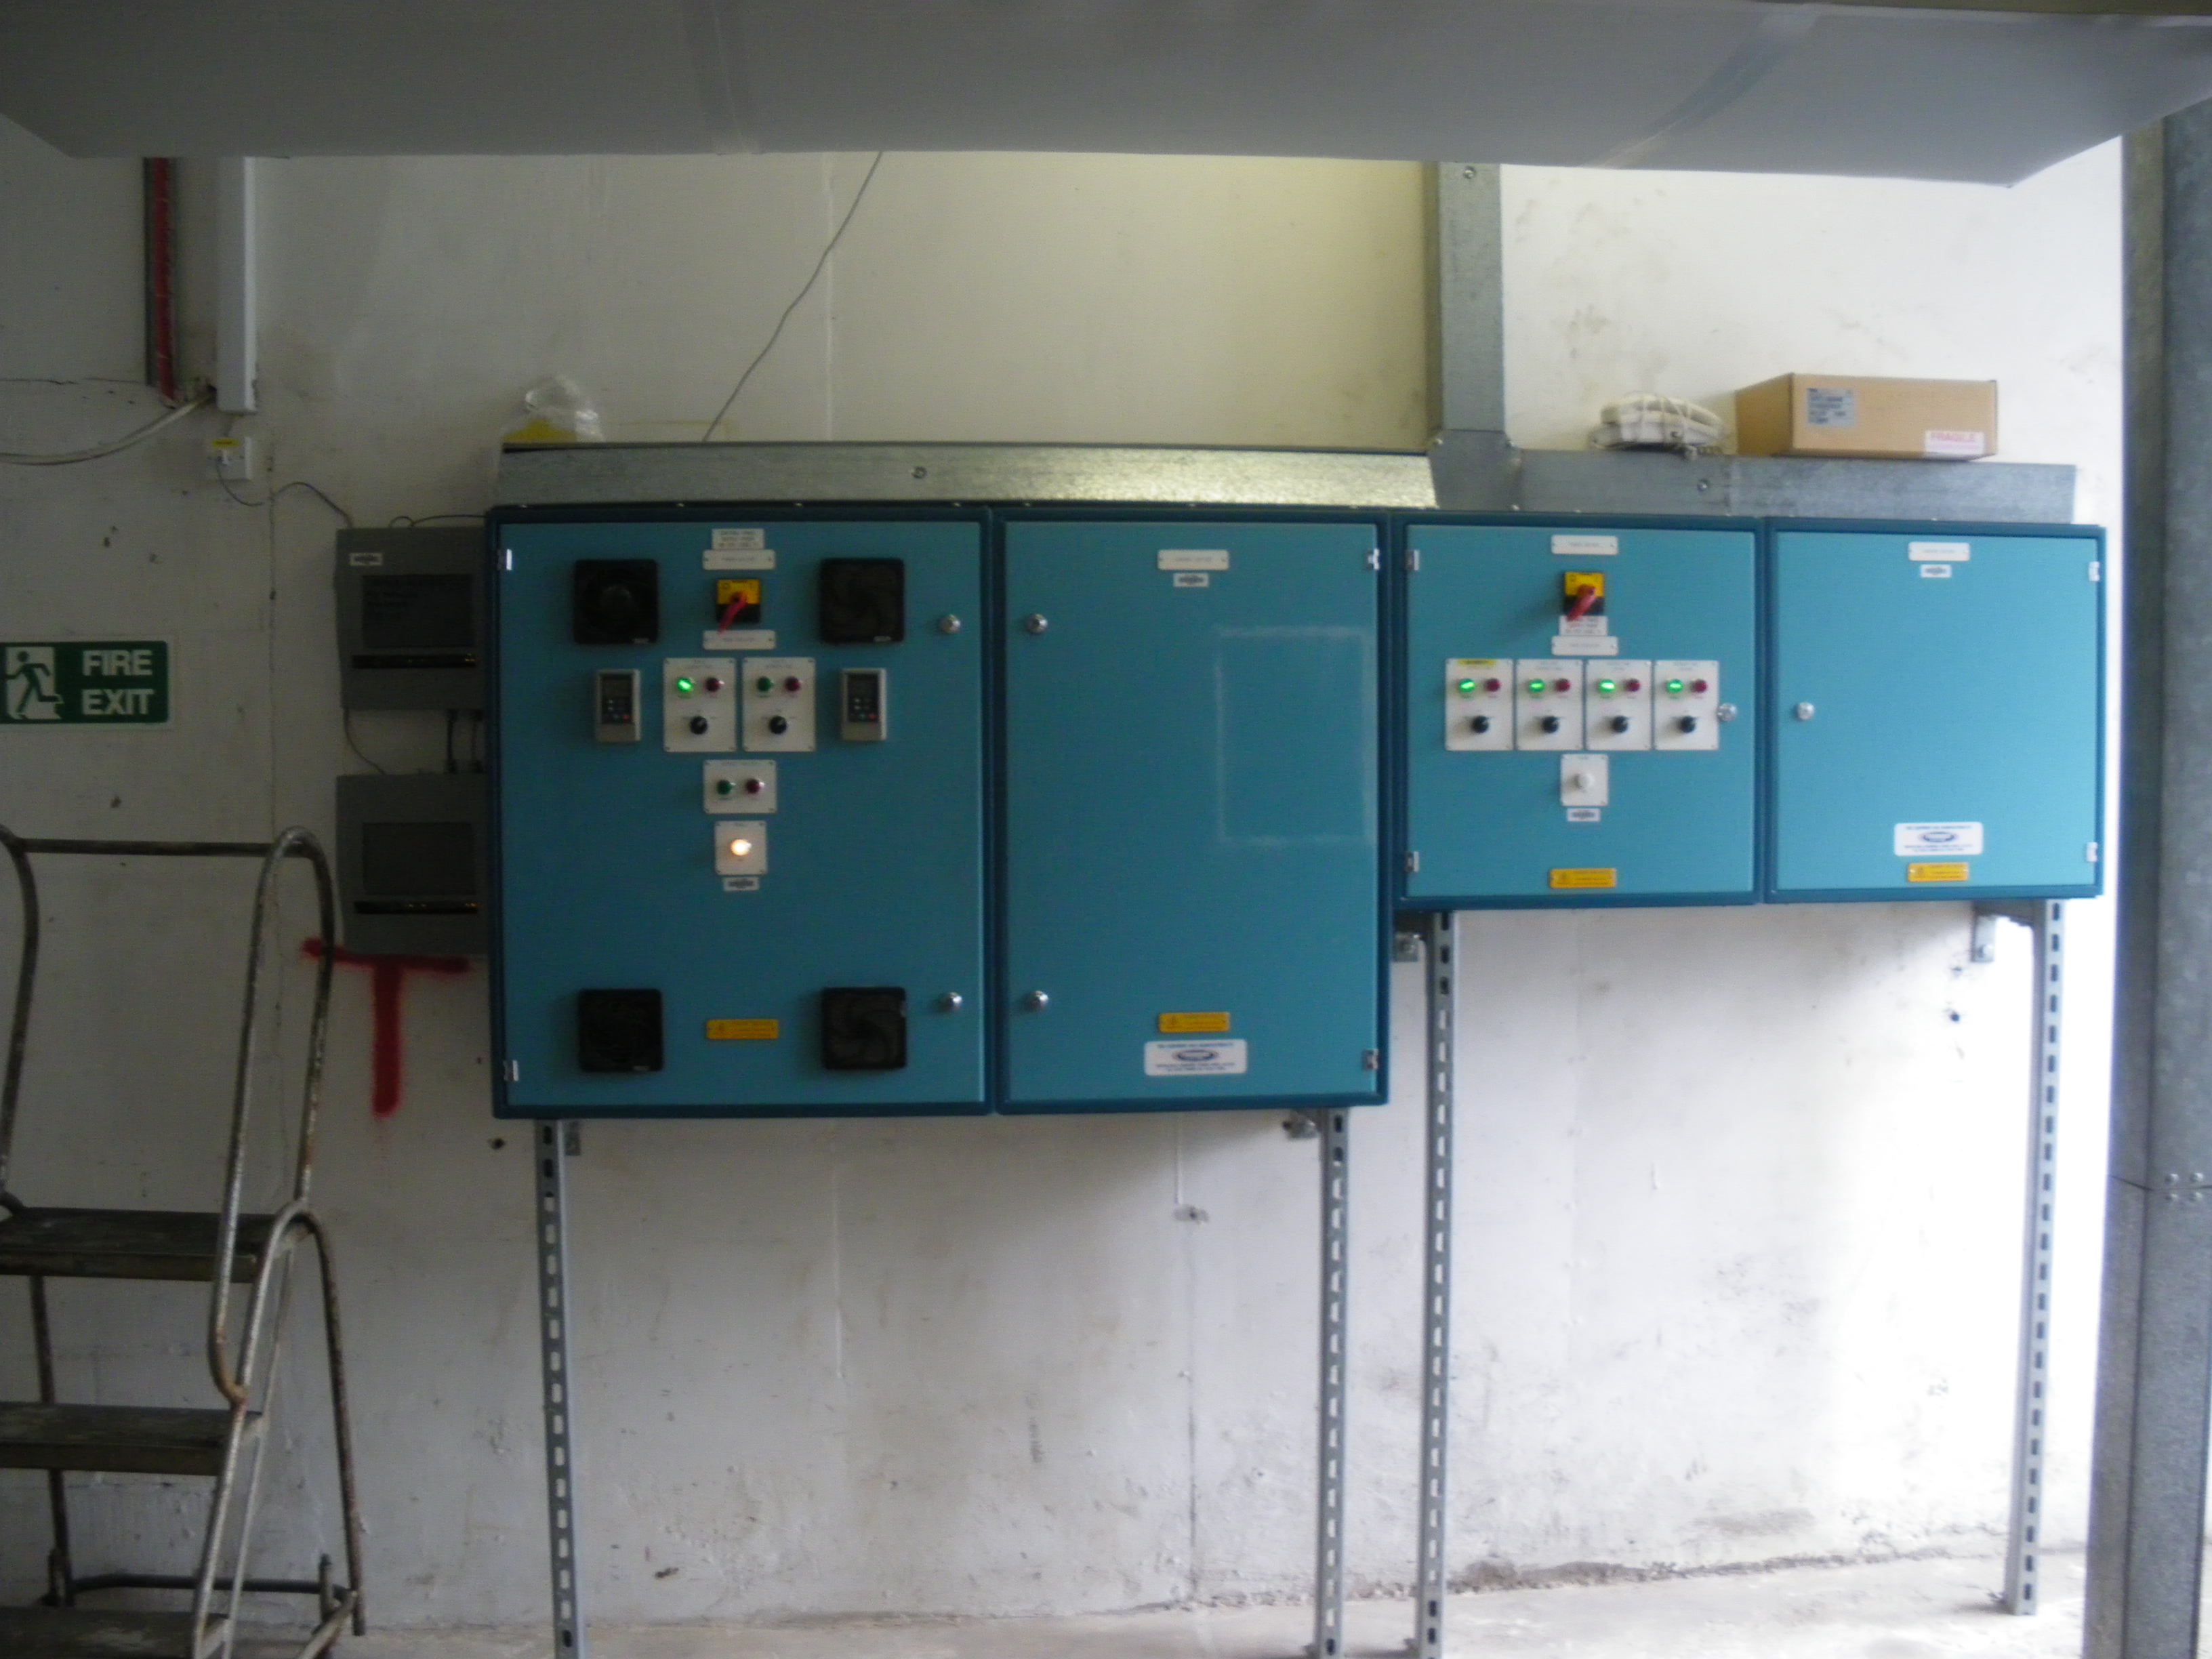 Control panel for new Reception area ventilation plant